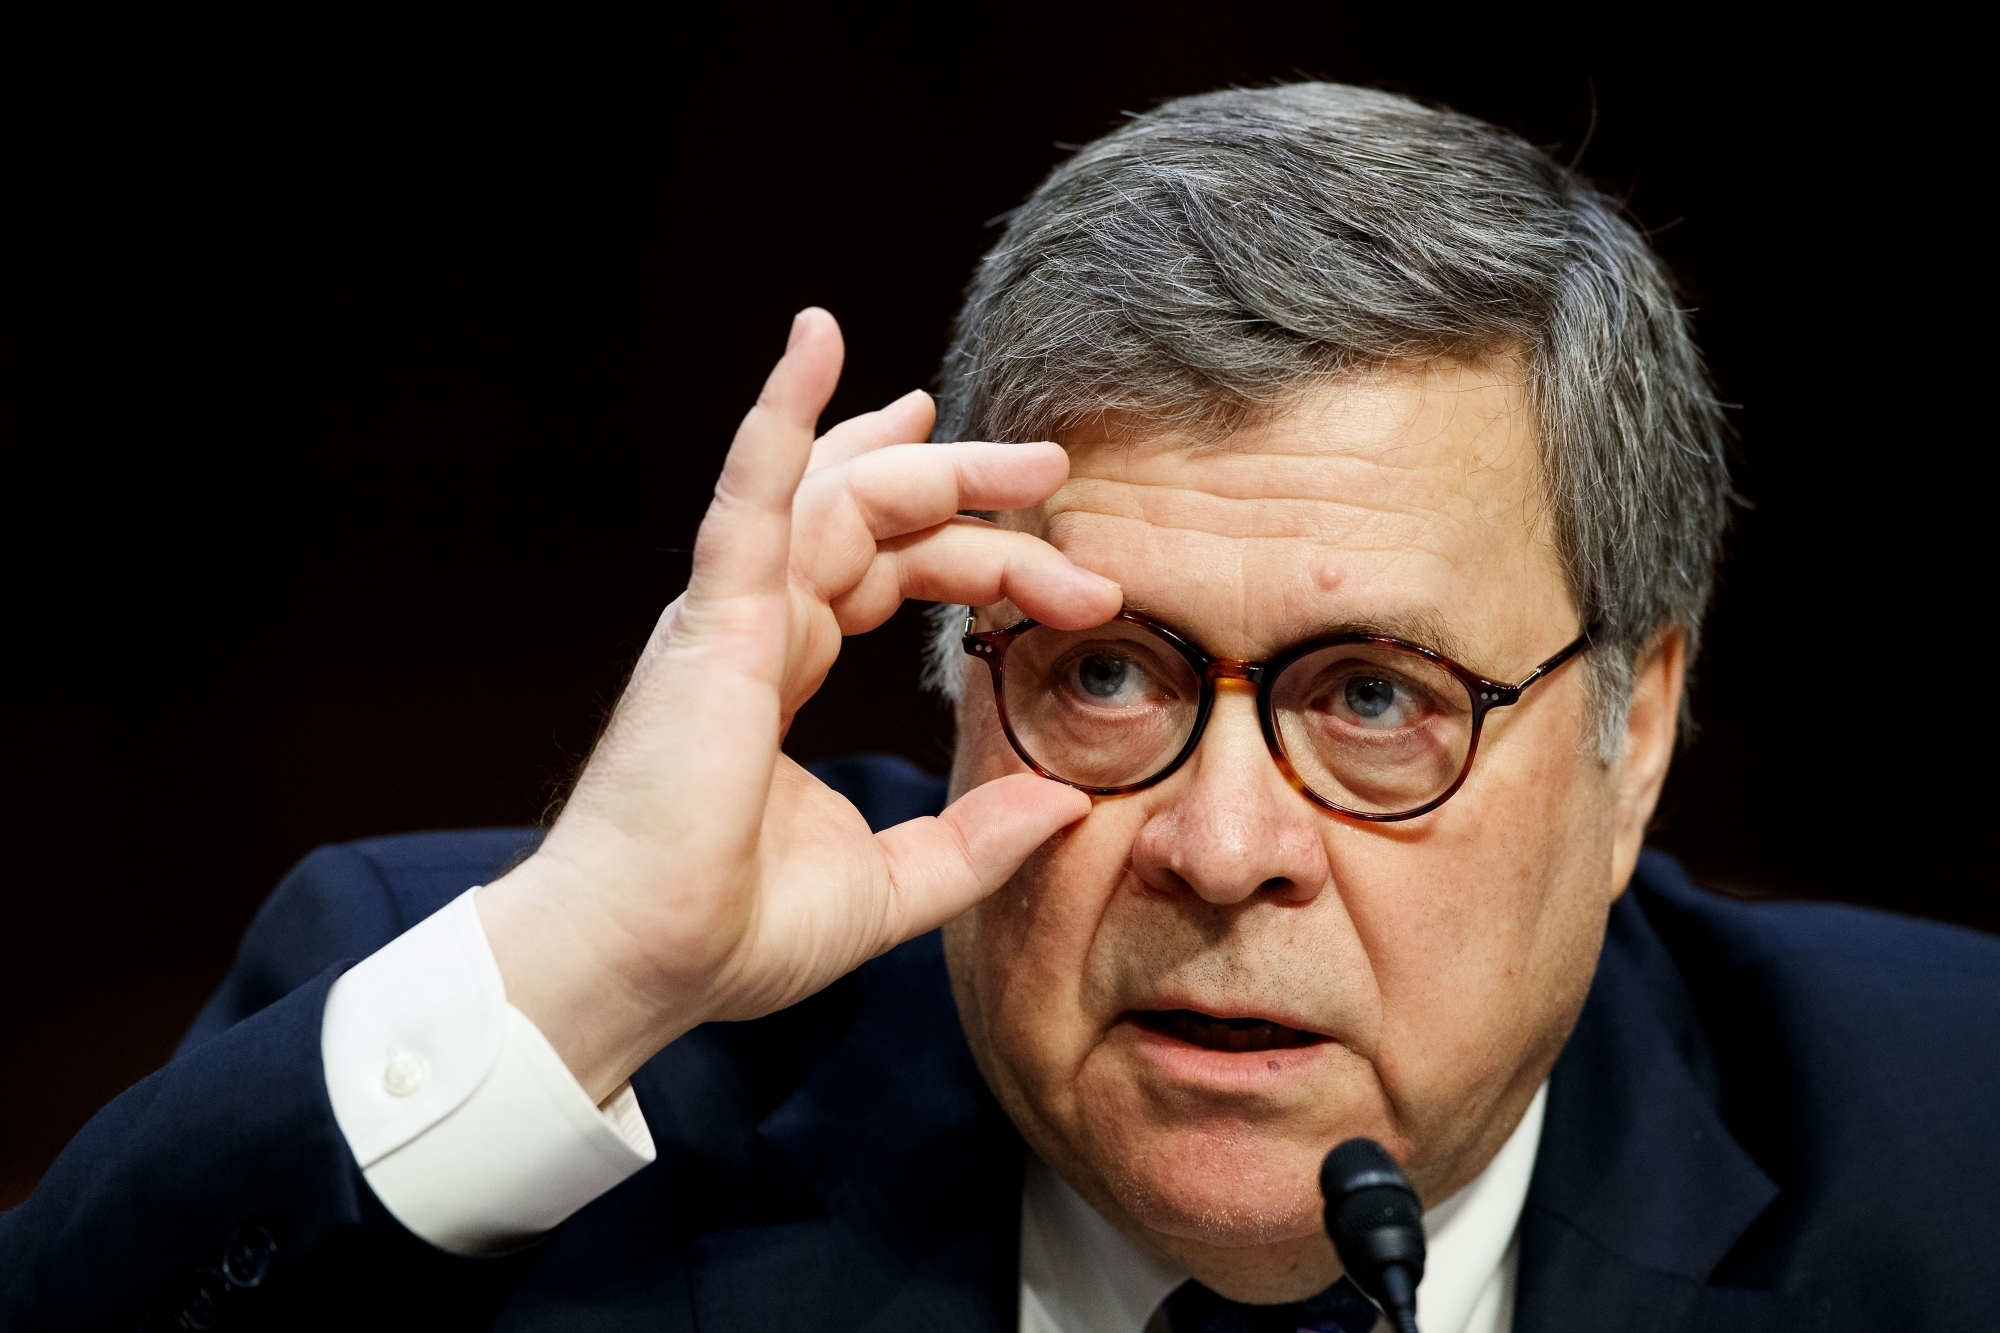 UPDATE 1-U.S. attorney general will not recuse himself from Mueller probe